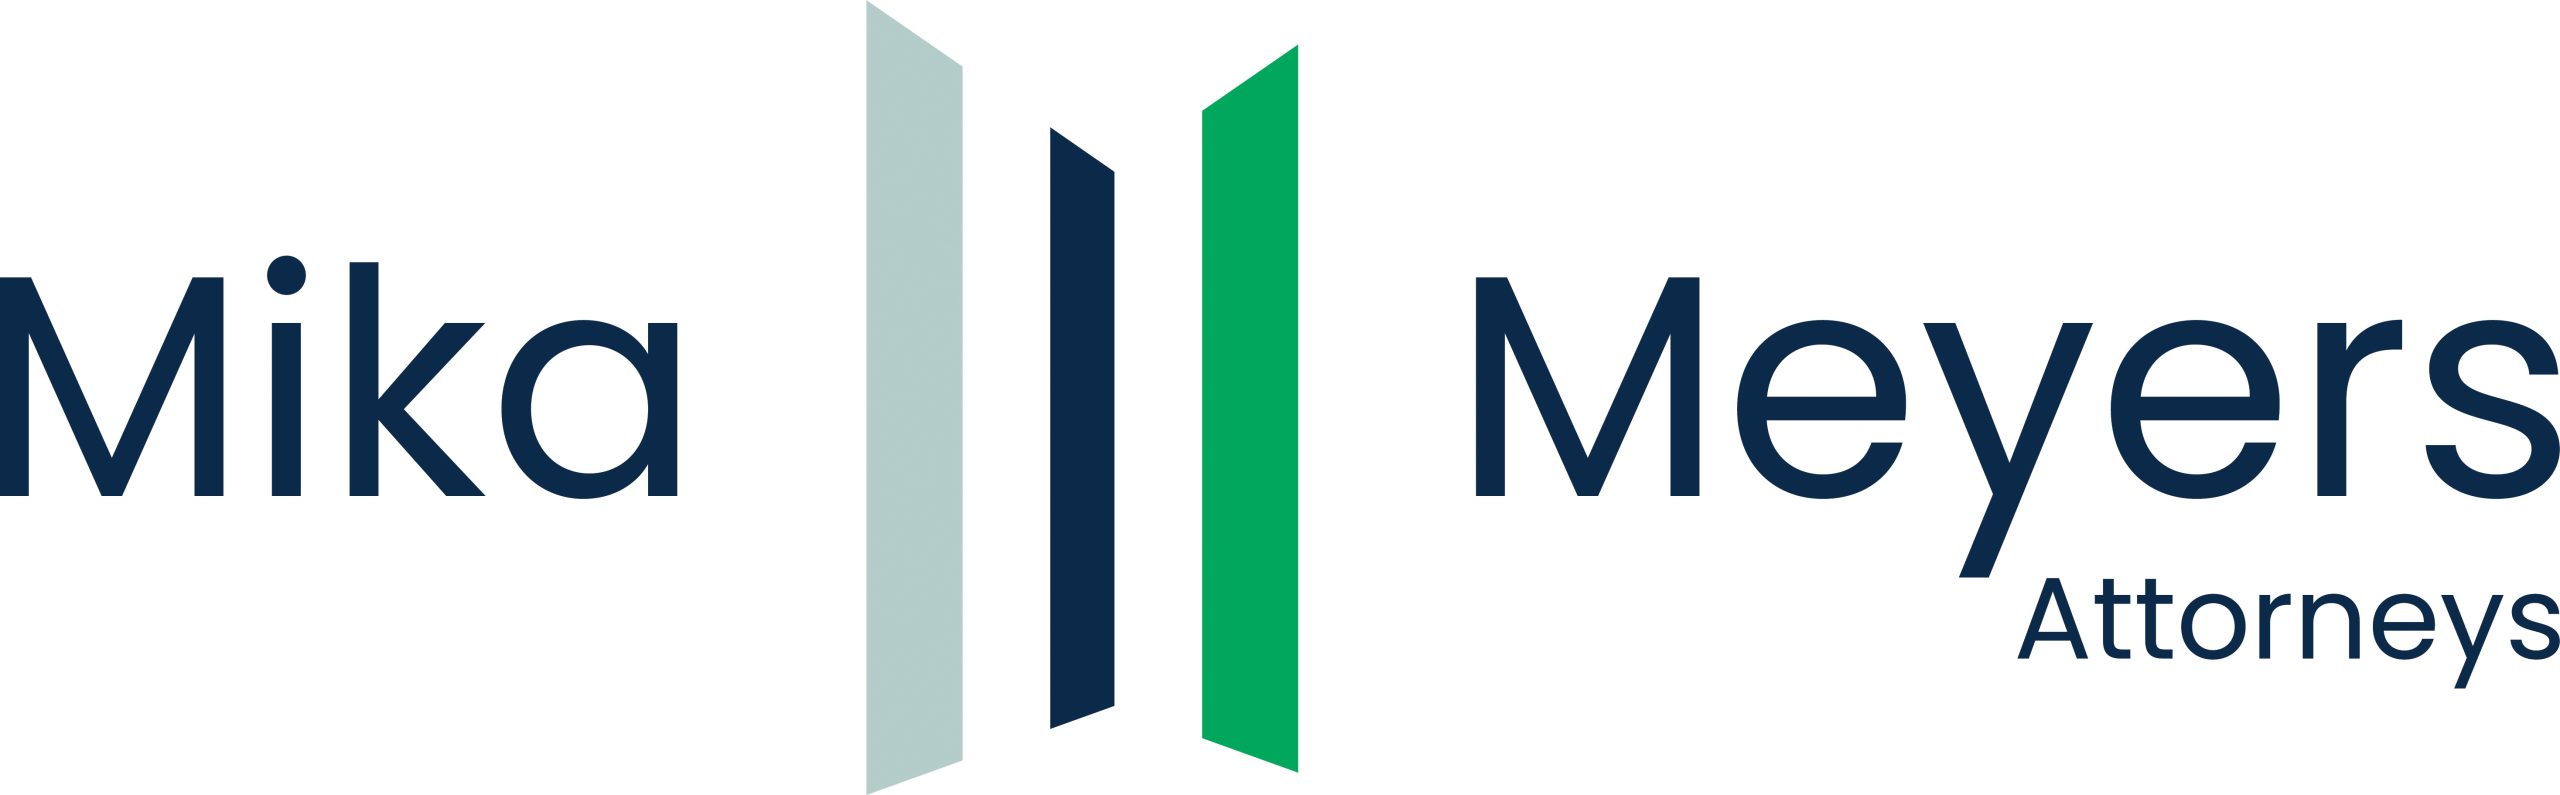 Mika Meyers logo